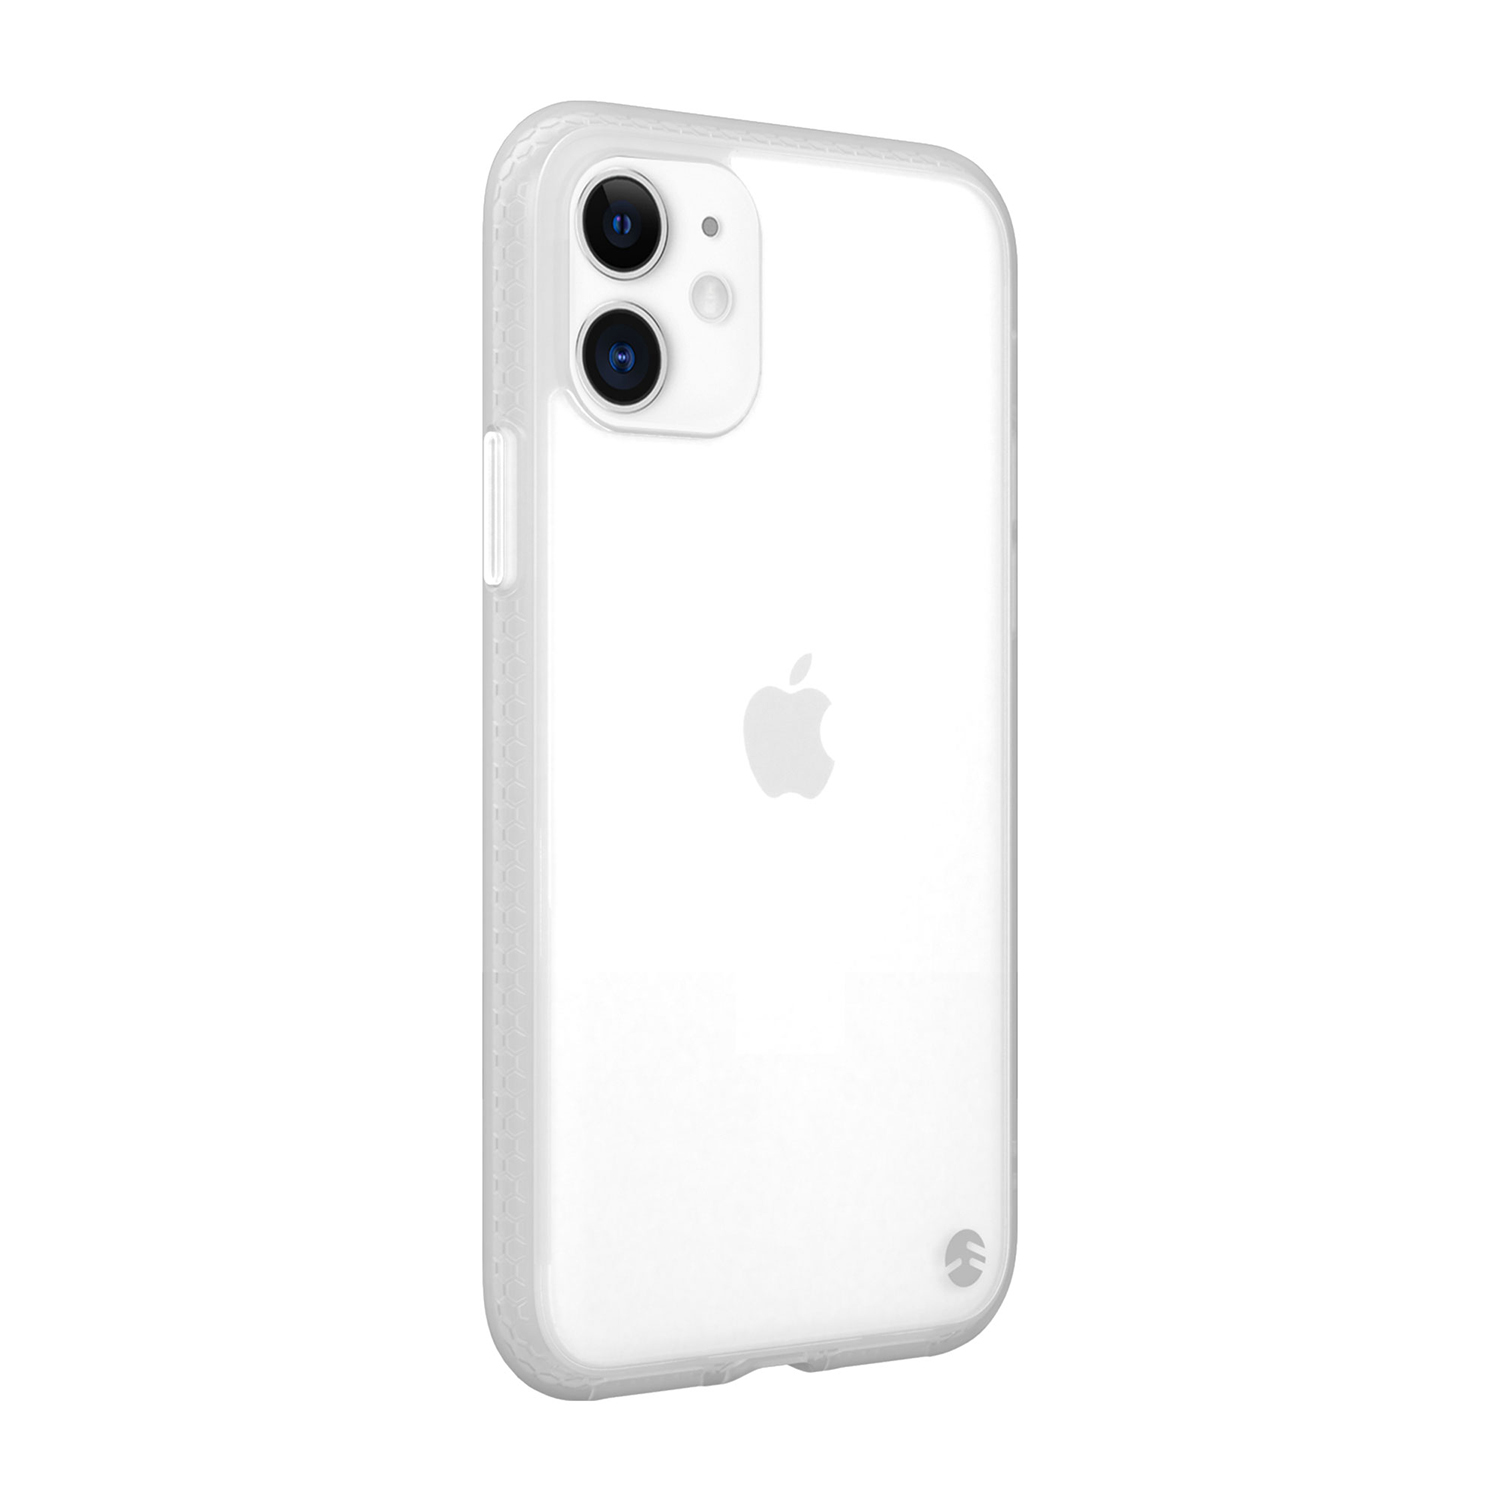 Iphone 11 Pro White